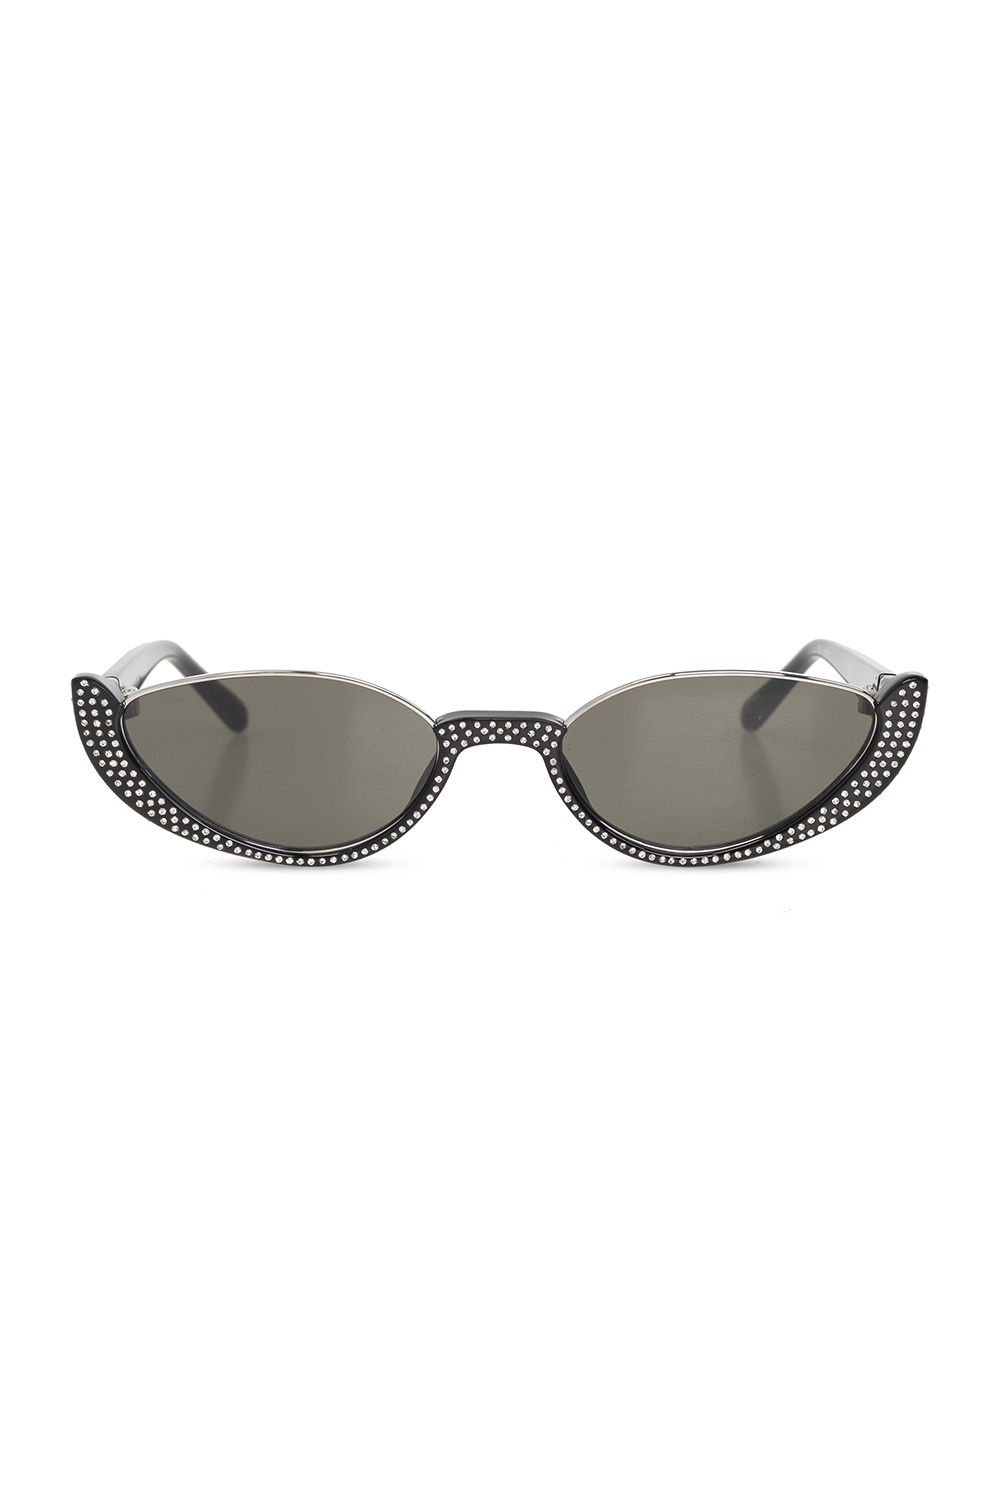 Linda Farrow ‘Robyn’ sunglasses